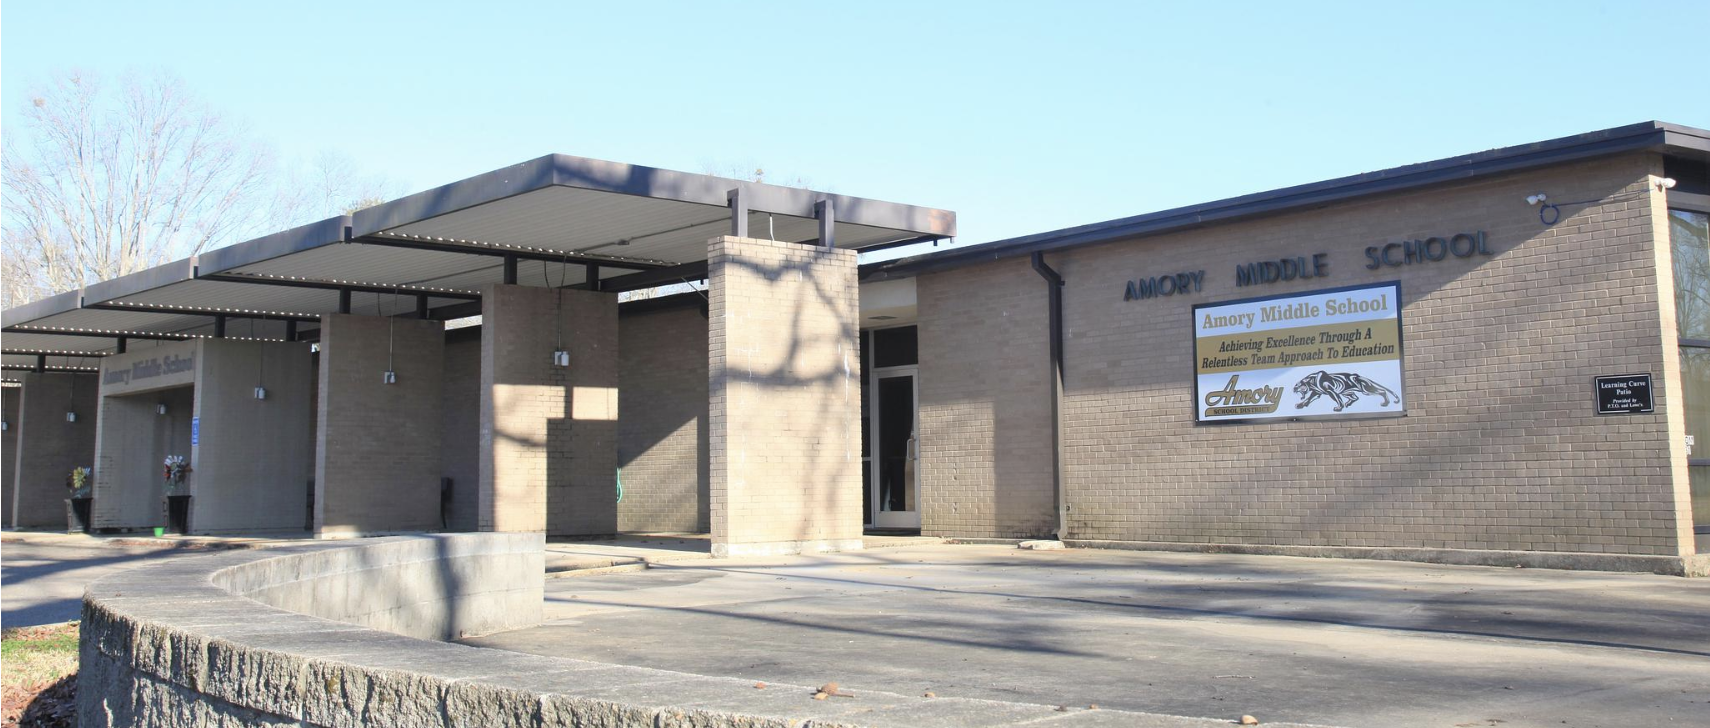 Amory Middle School Entrance